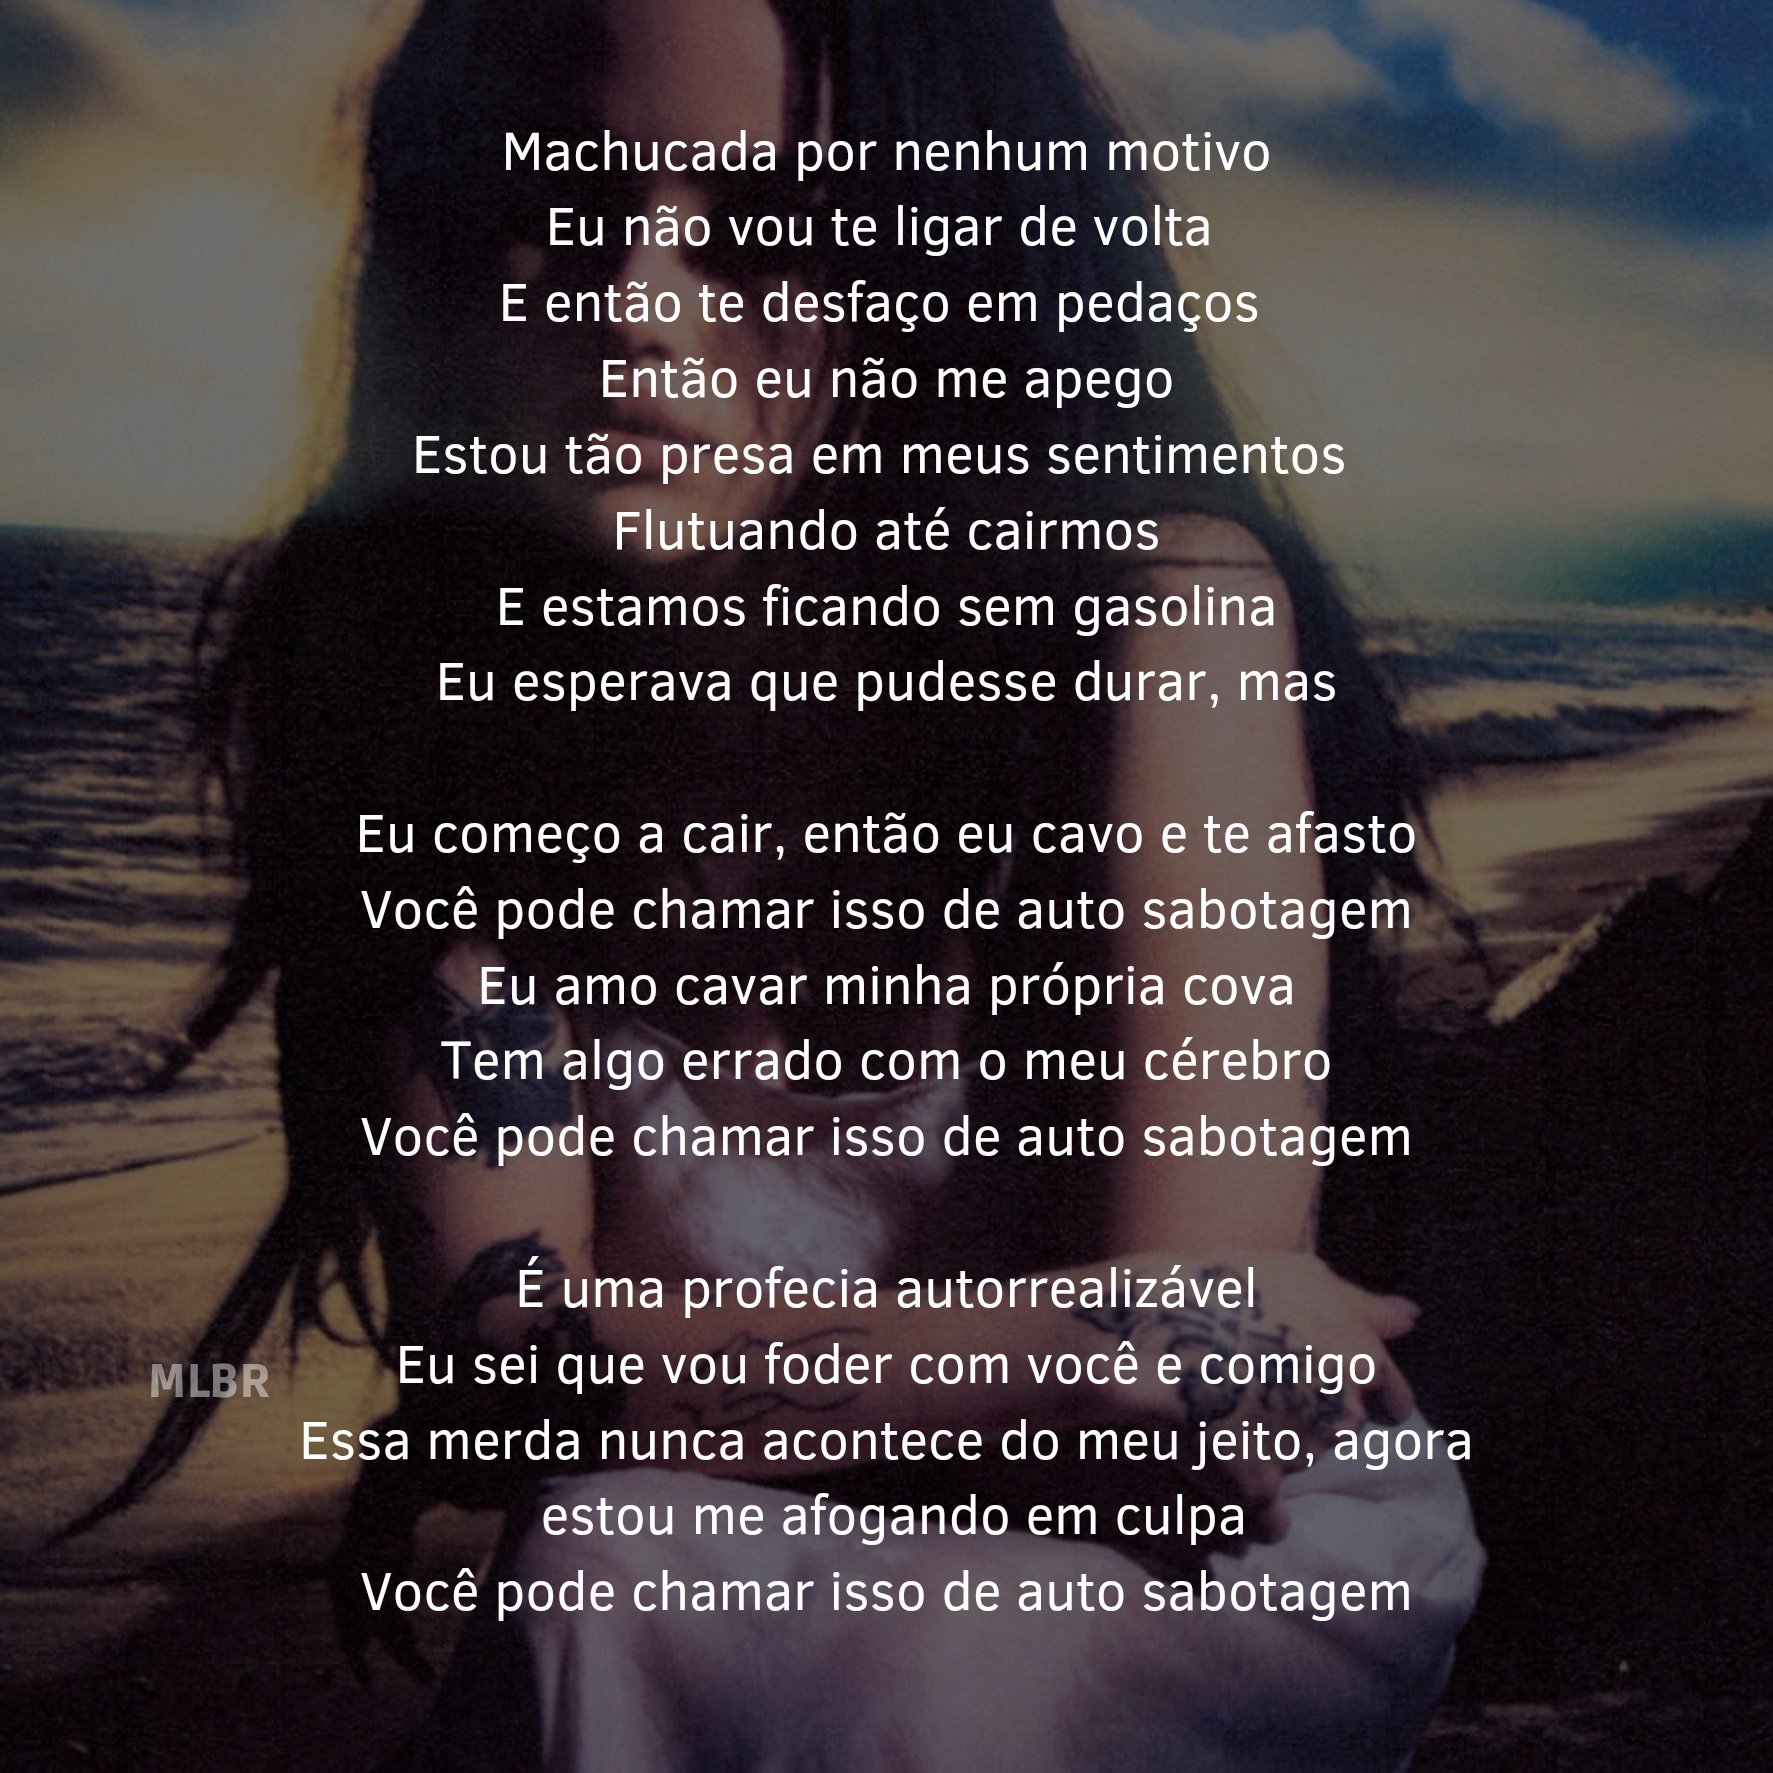 Maggie Lindemann Brasil on X: 🚨  Tradução em PT-BR da letra de self  sabotage!  / X